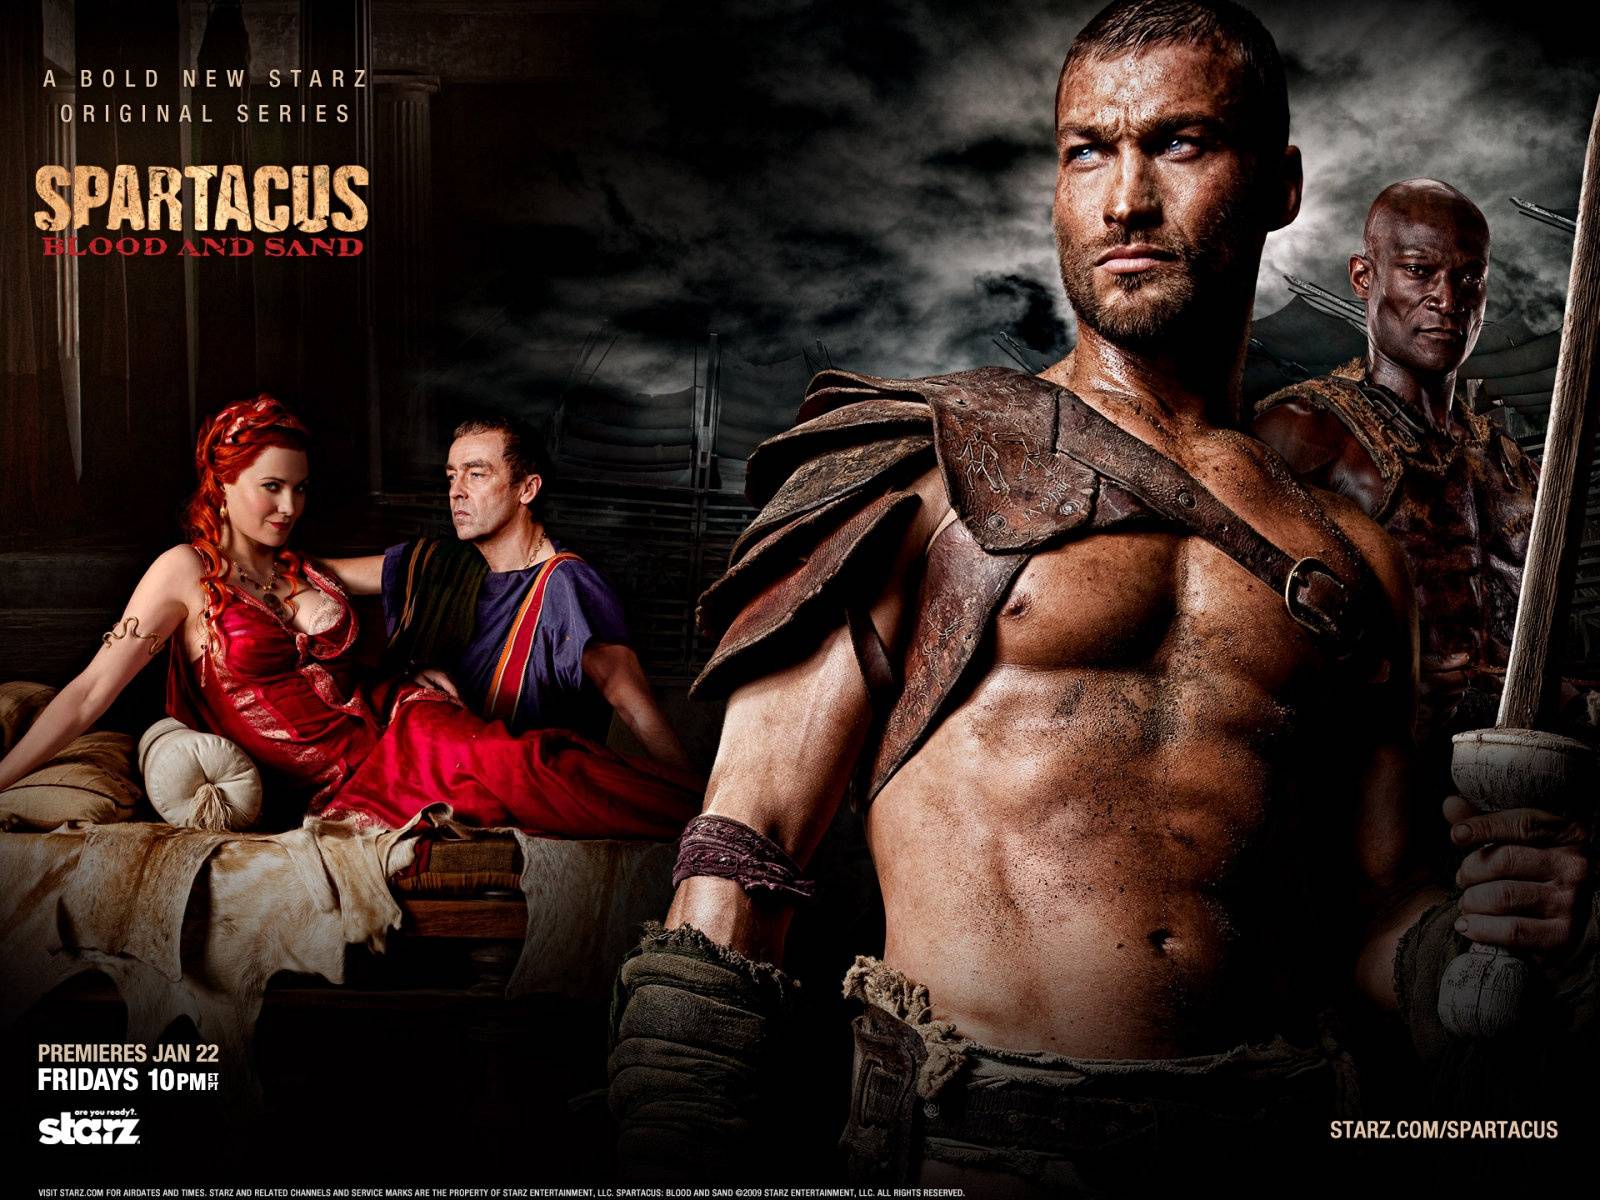 Spartacus Season 3: Vengeance (2012)